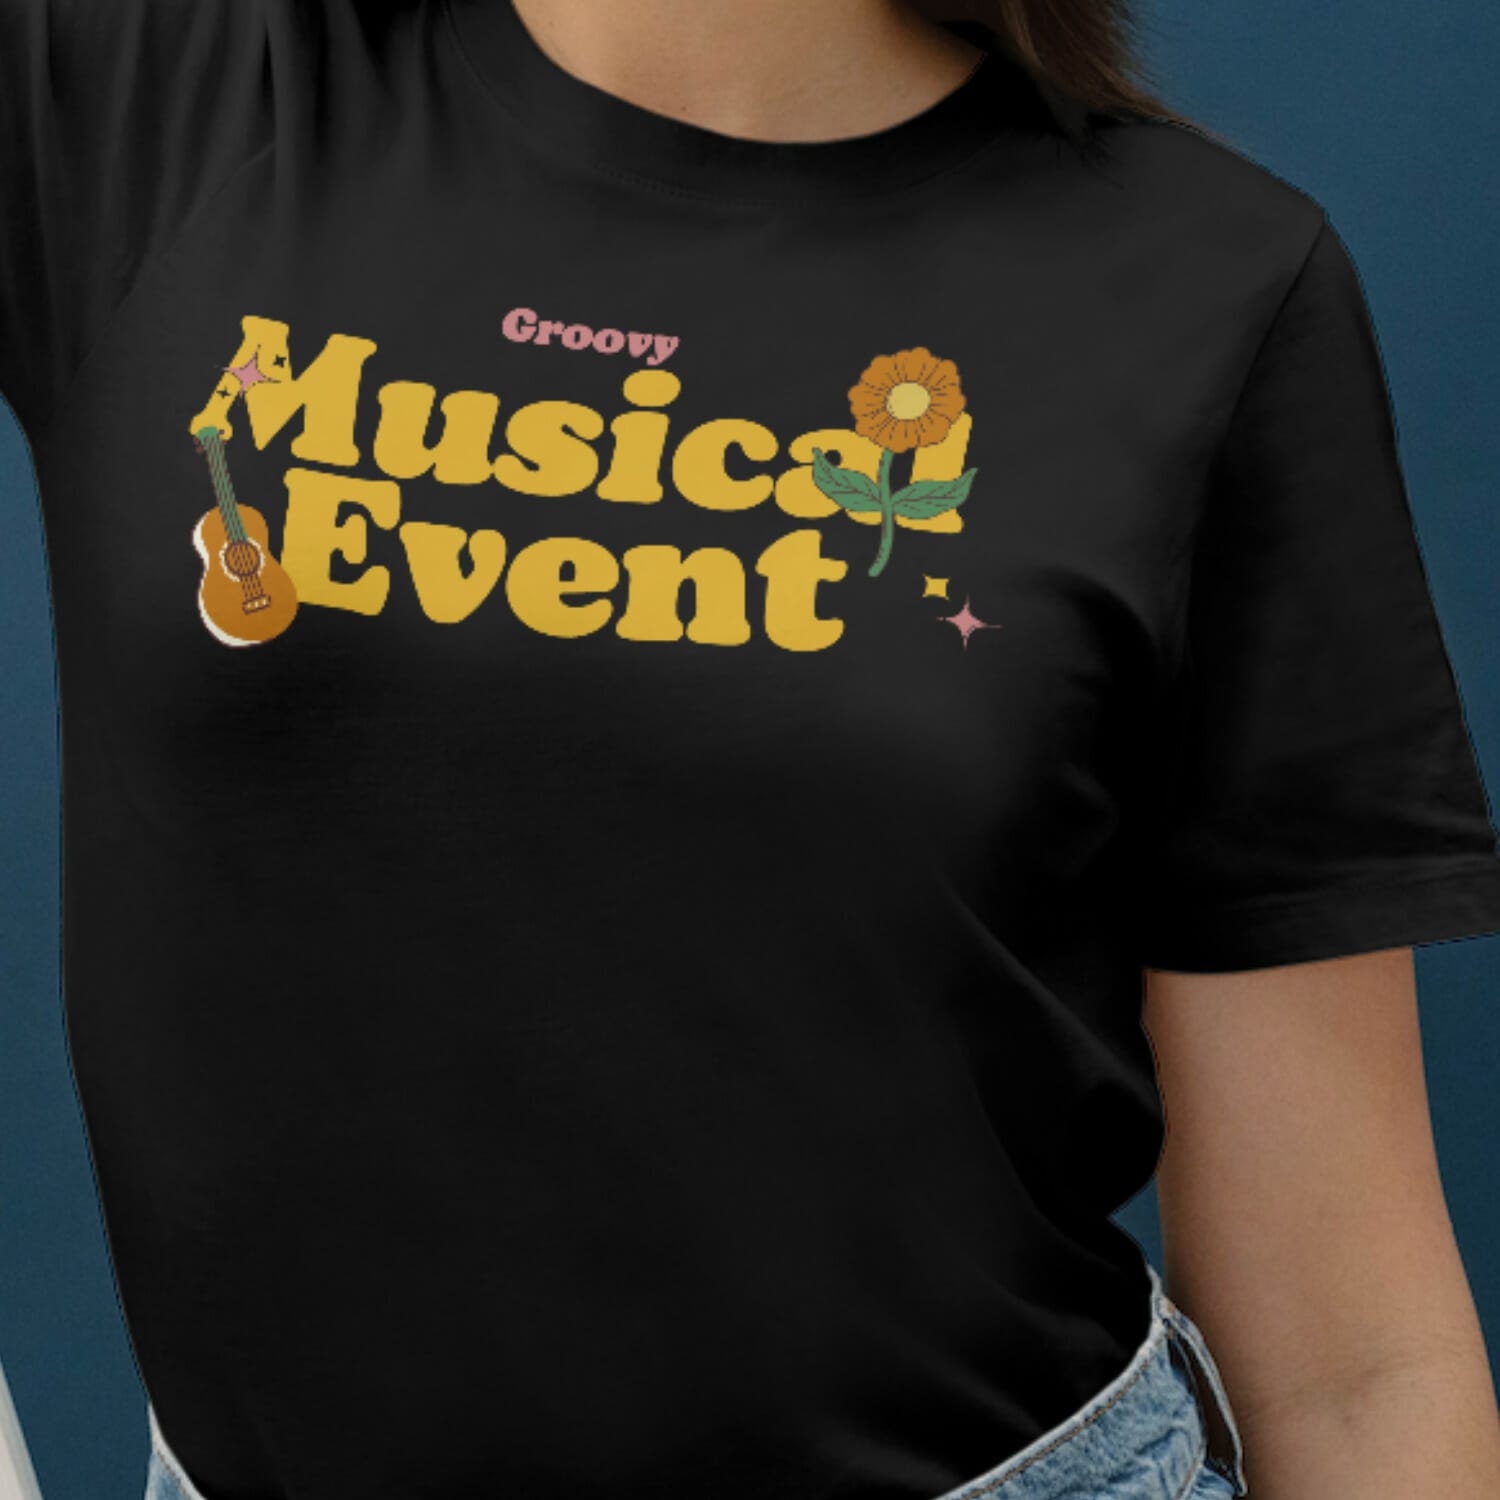 Groovy Musical Event Tshirt Design